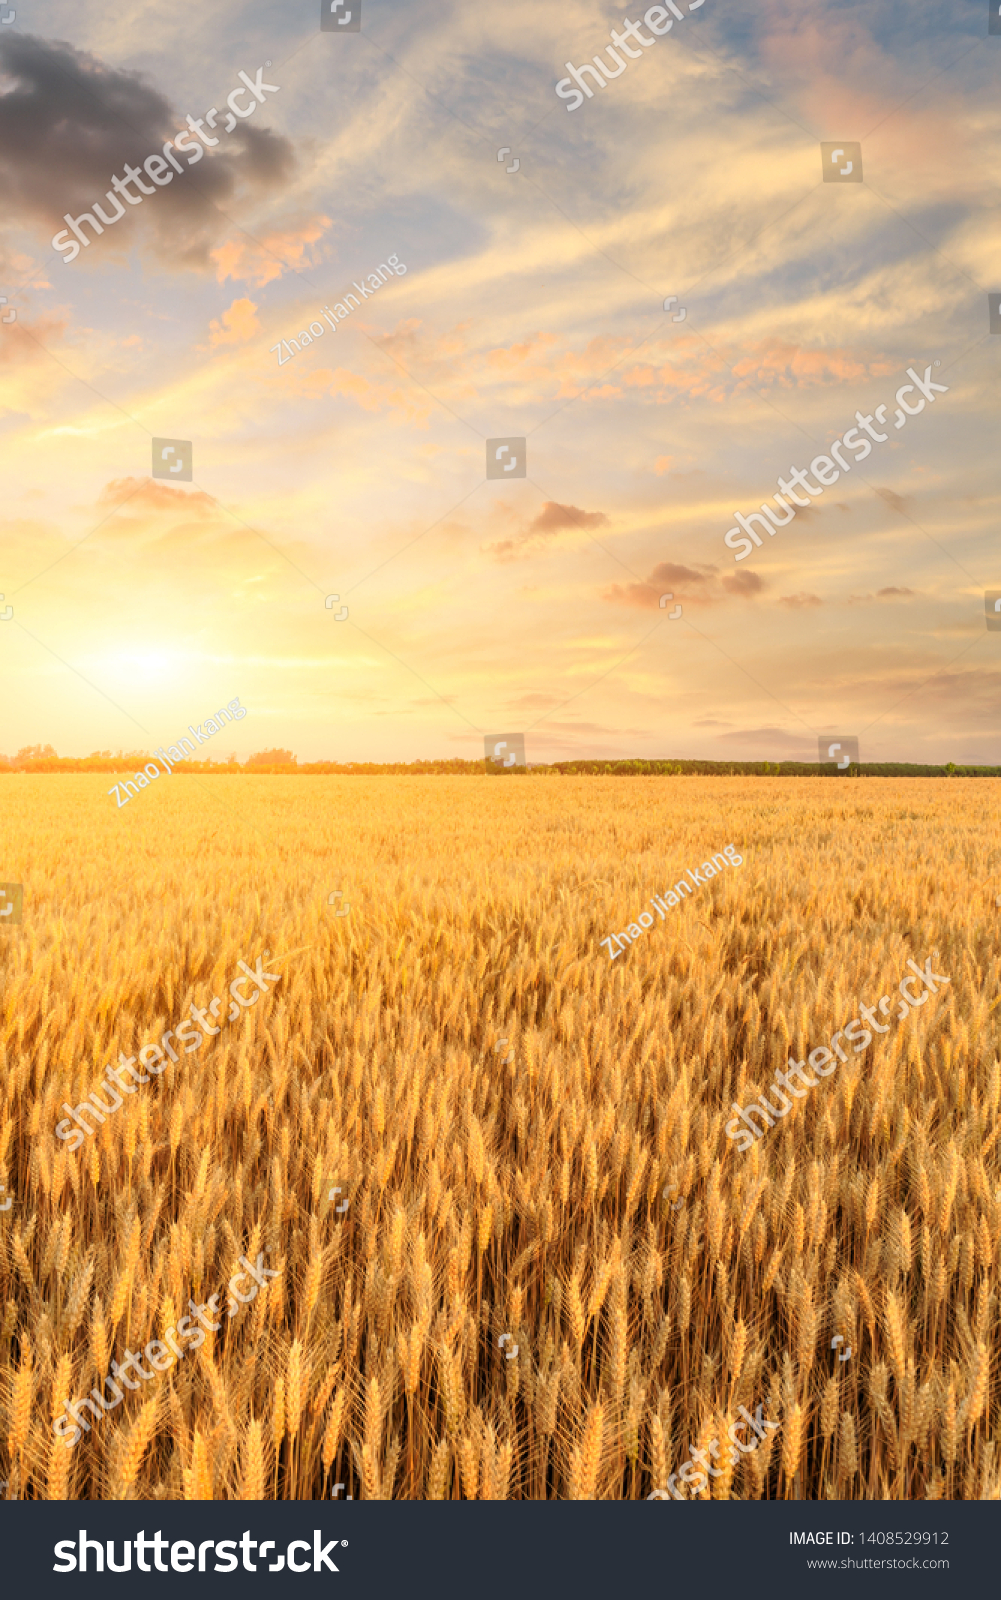 Wheat crop field sunset landscape #1408529912